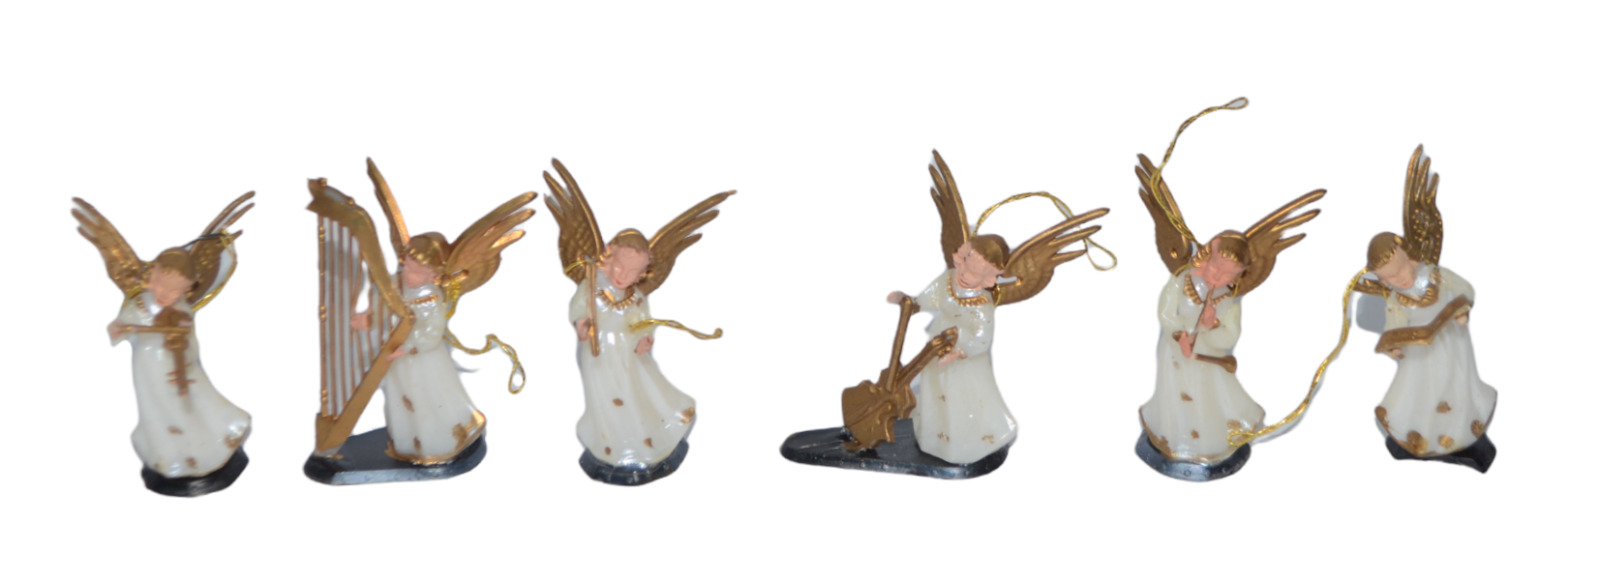 Vintage Musical Angels Christmas Ornaments Set Of 6 Plastic Choir